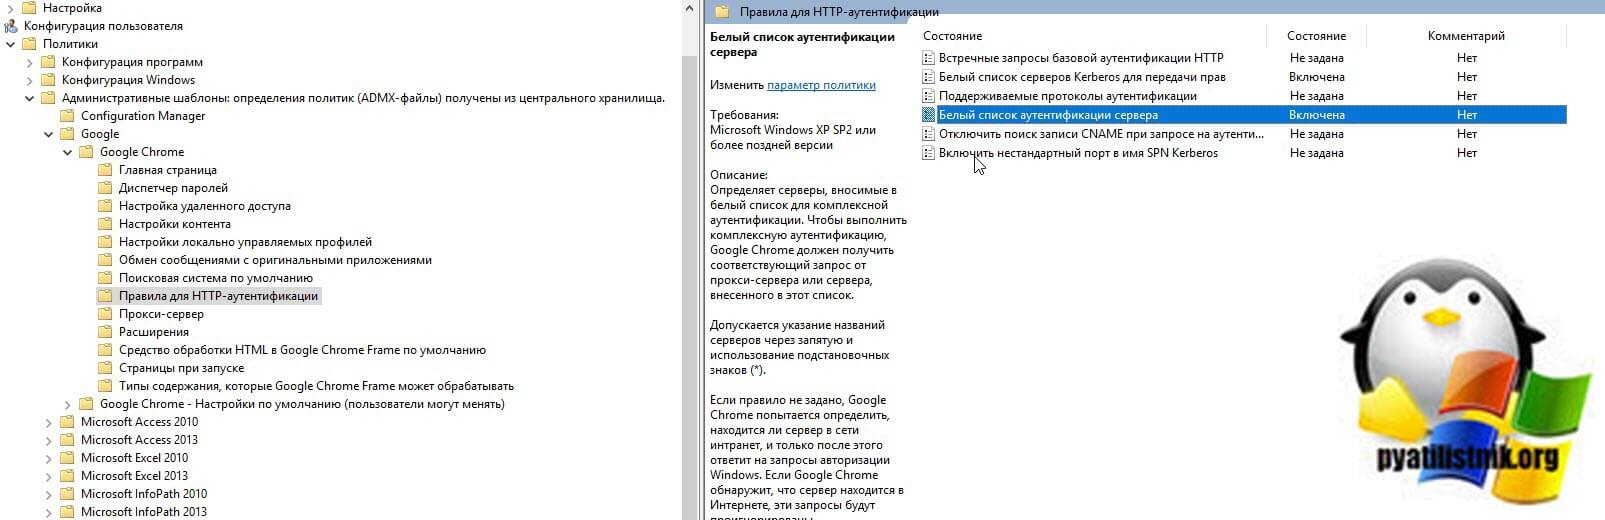 GPO Google Chrome Белый список аутентификации сервера